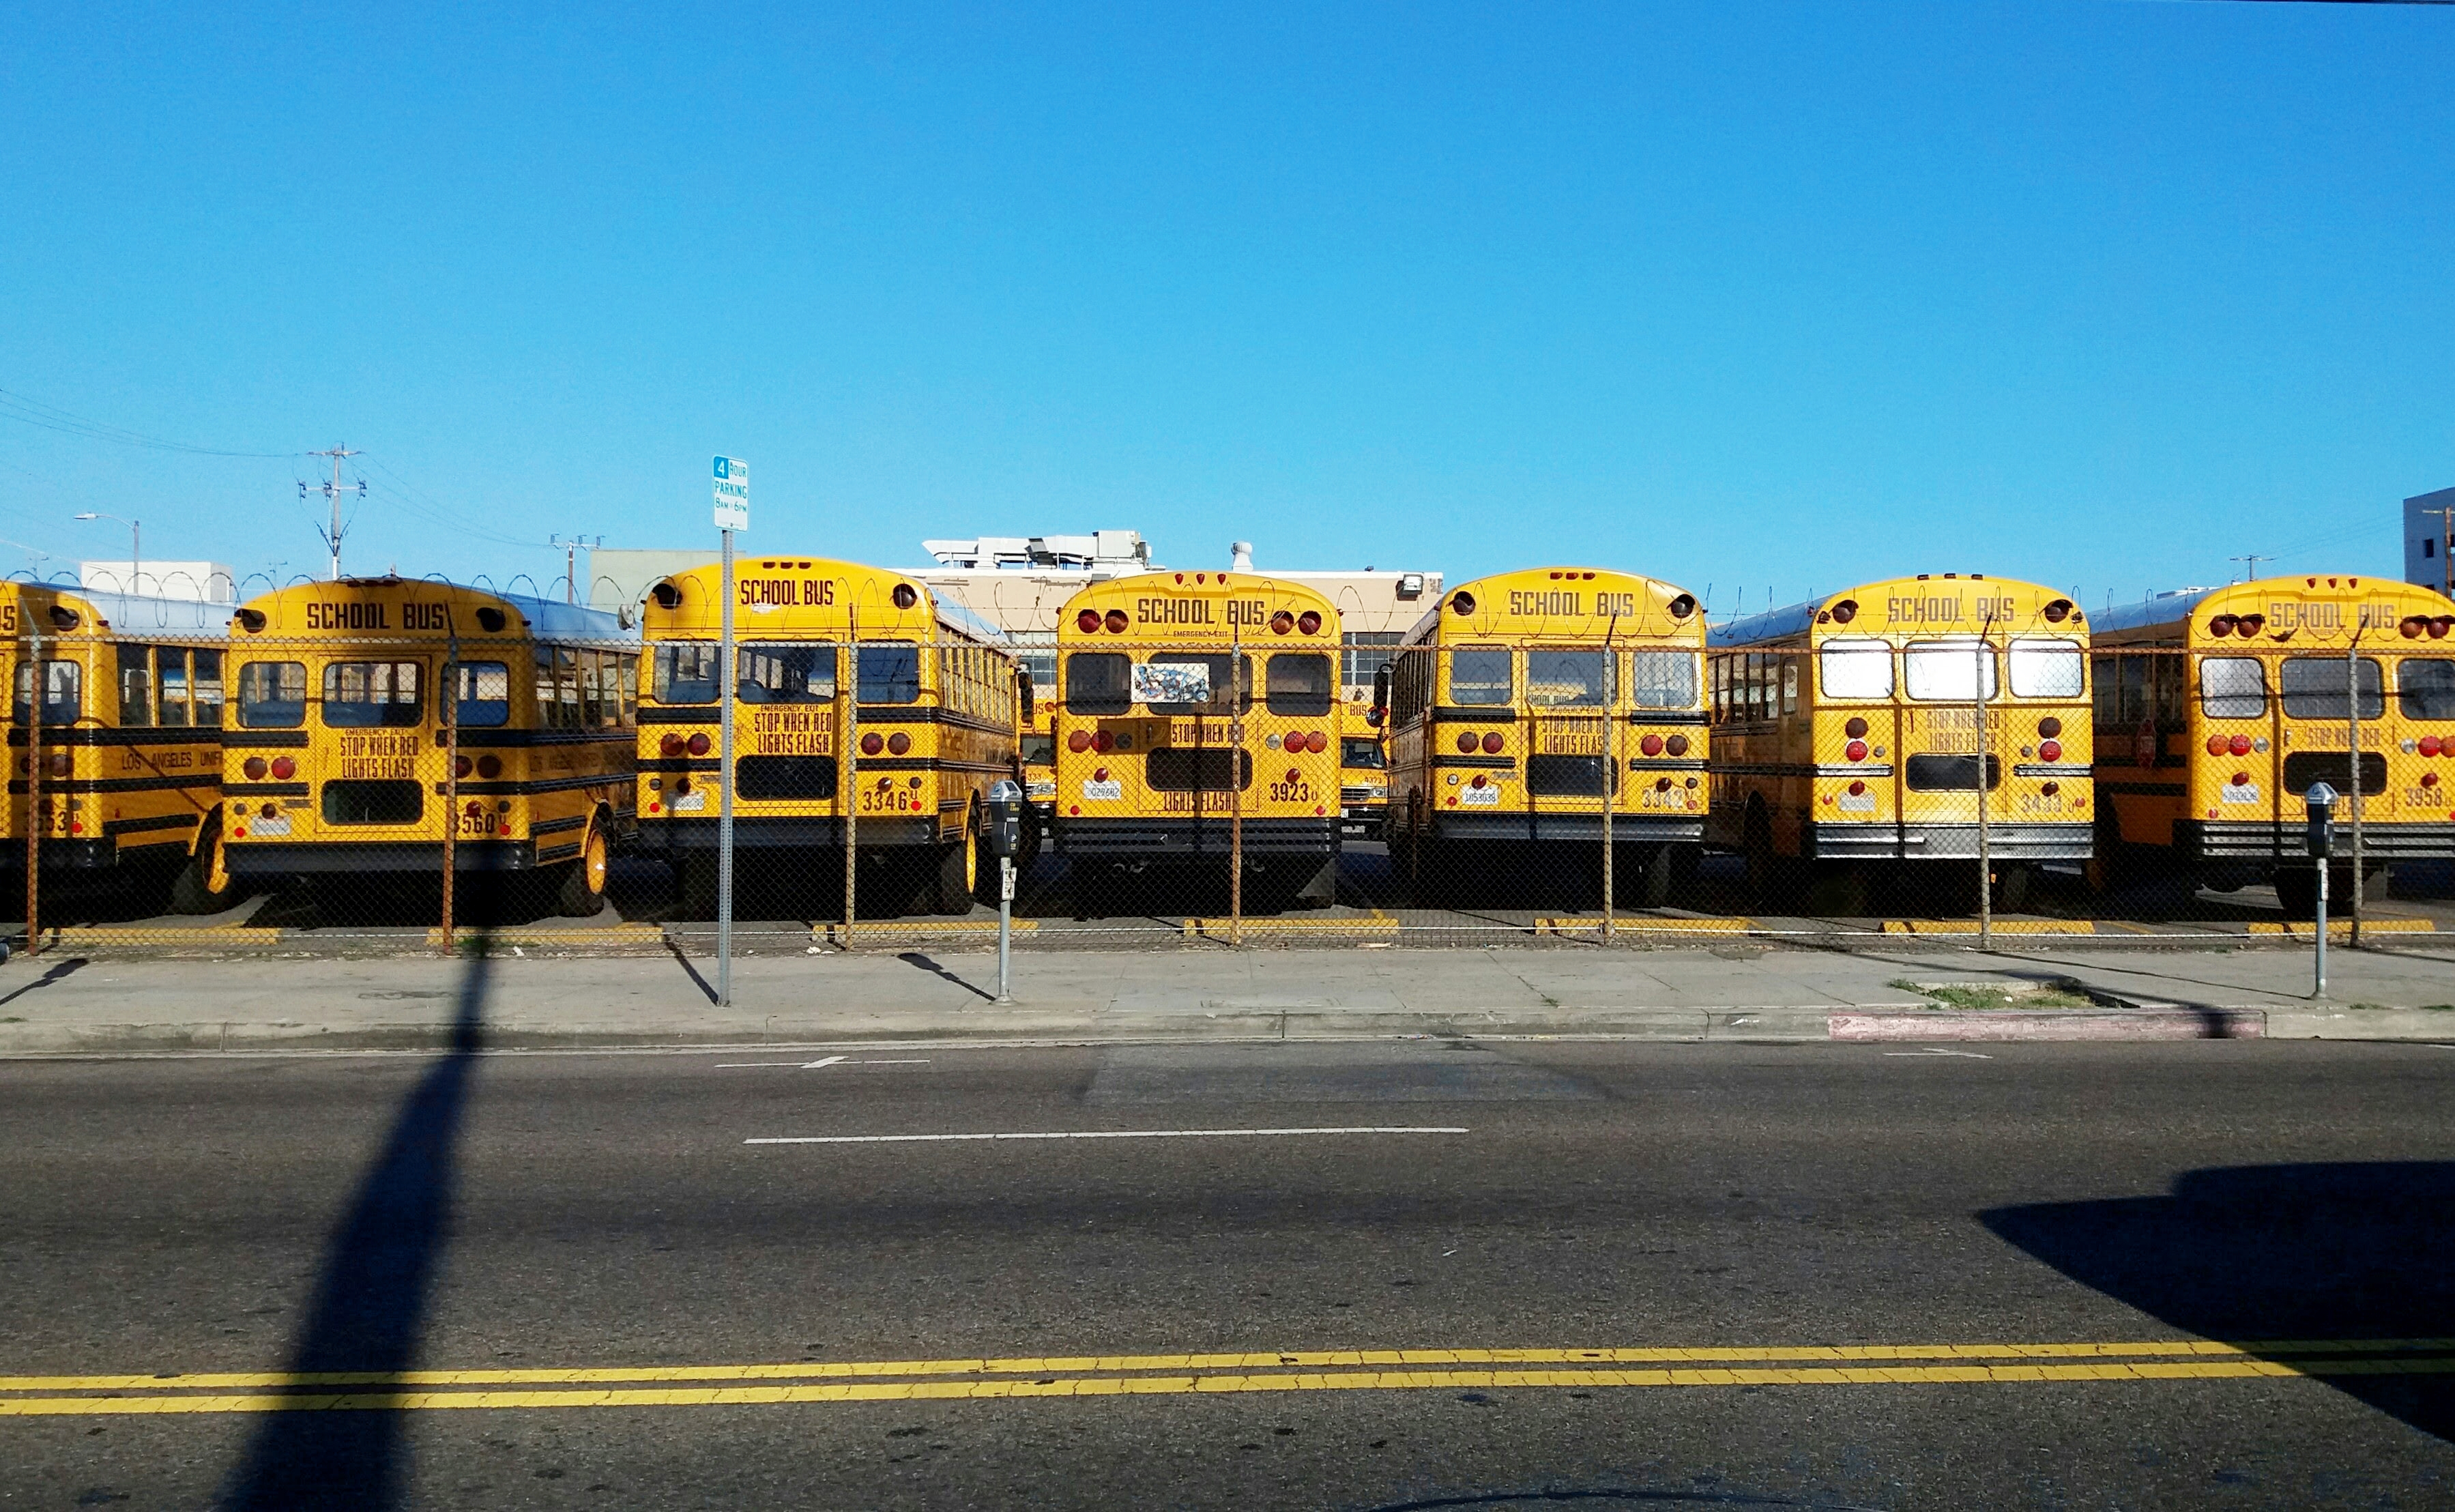 K12 stockphoto fleet of parked buses